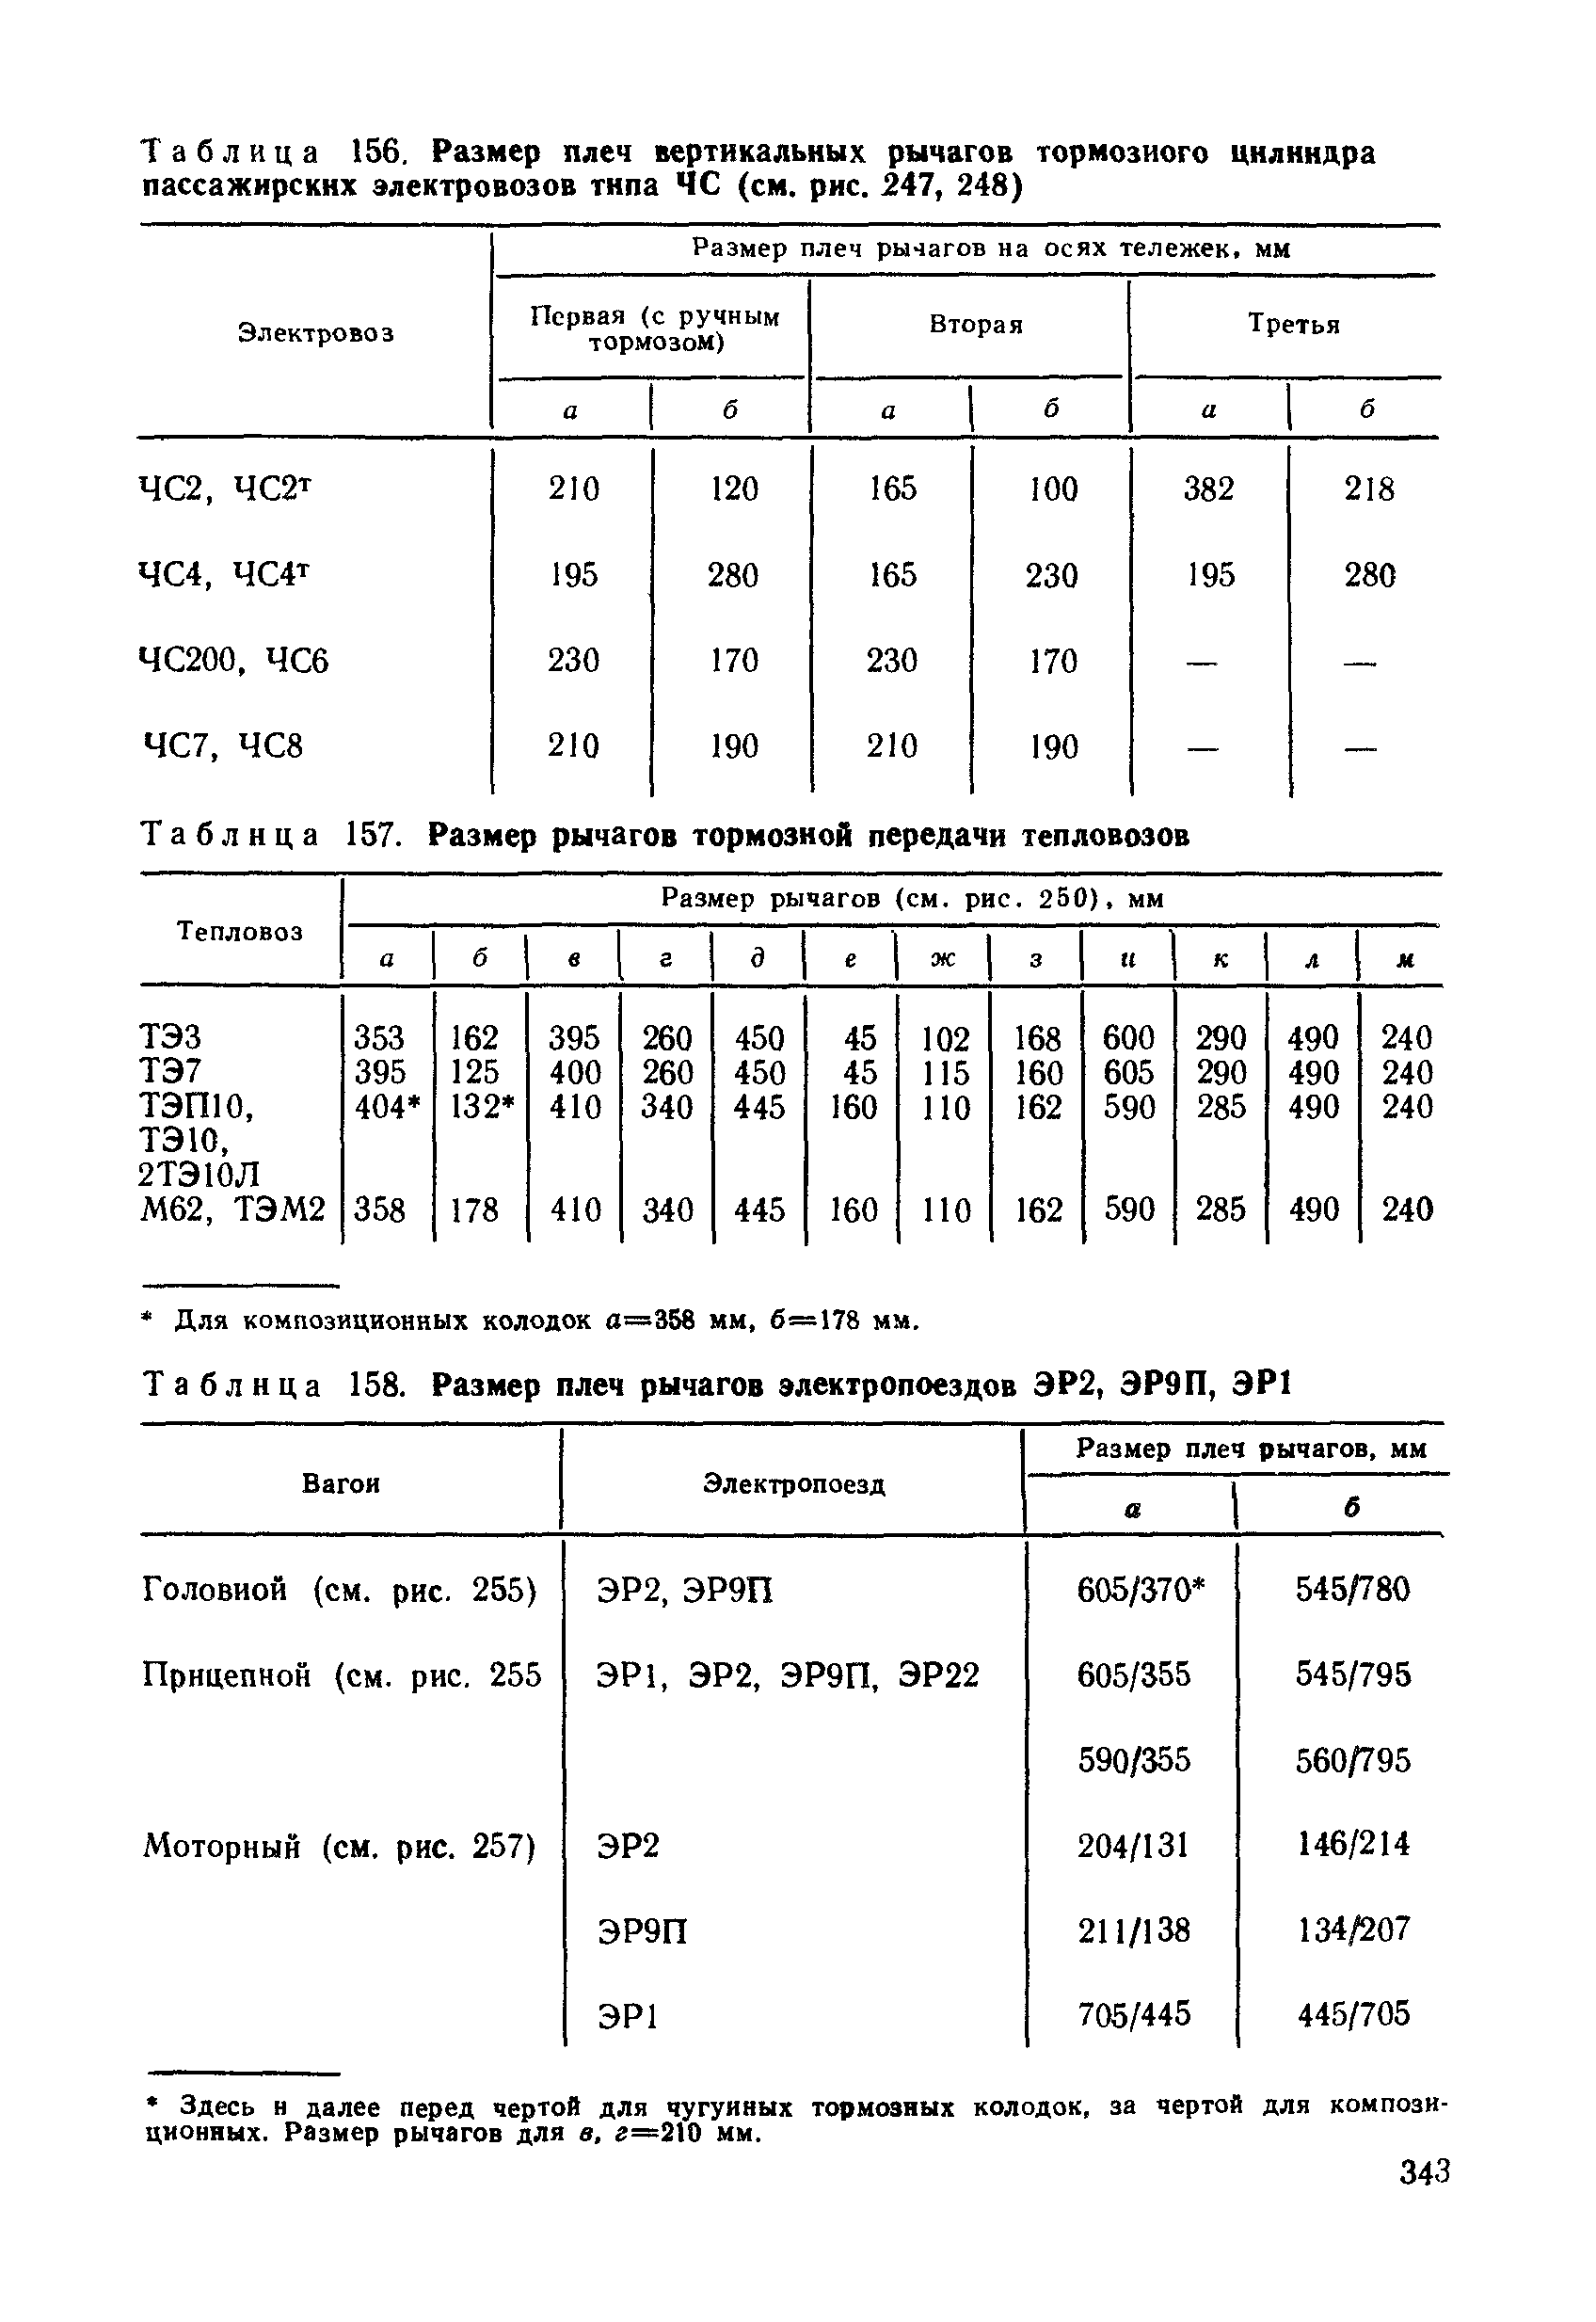 Таблица 158. Размер плеч рычагов электропоездов ЭР2, ЭР9П, ЭР1
